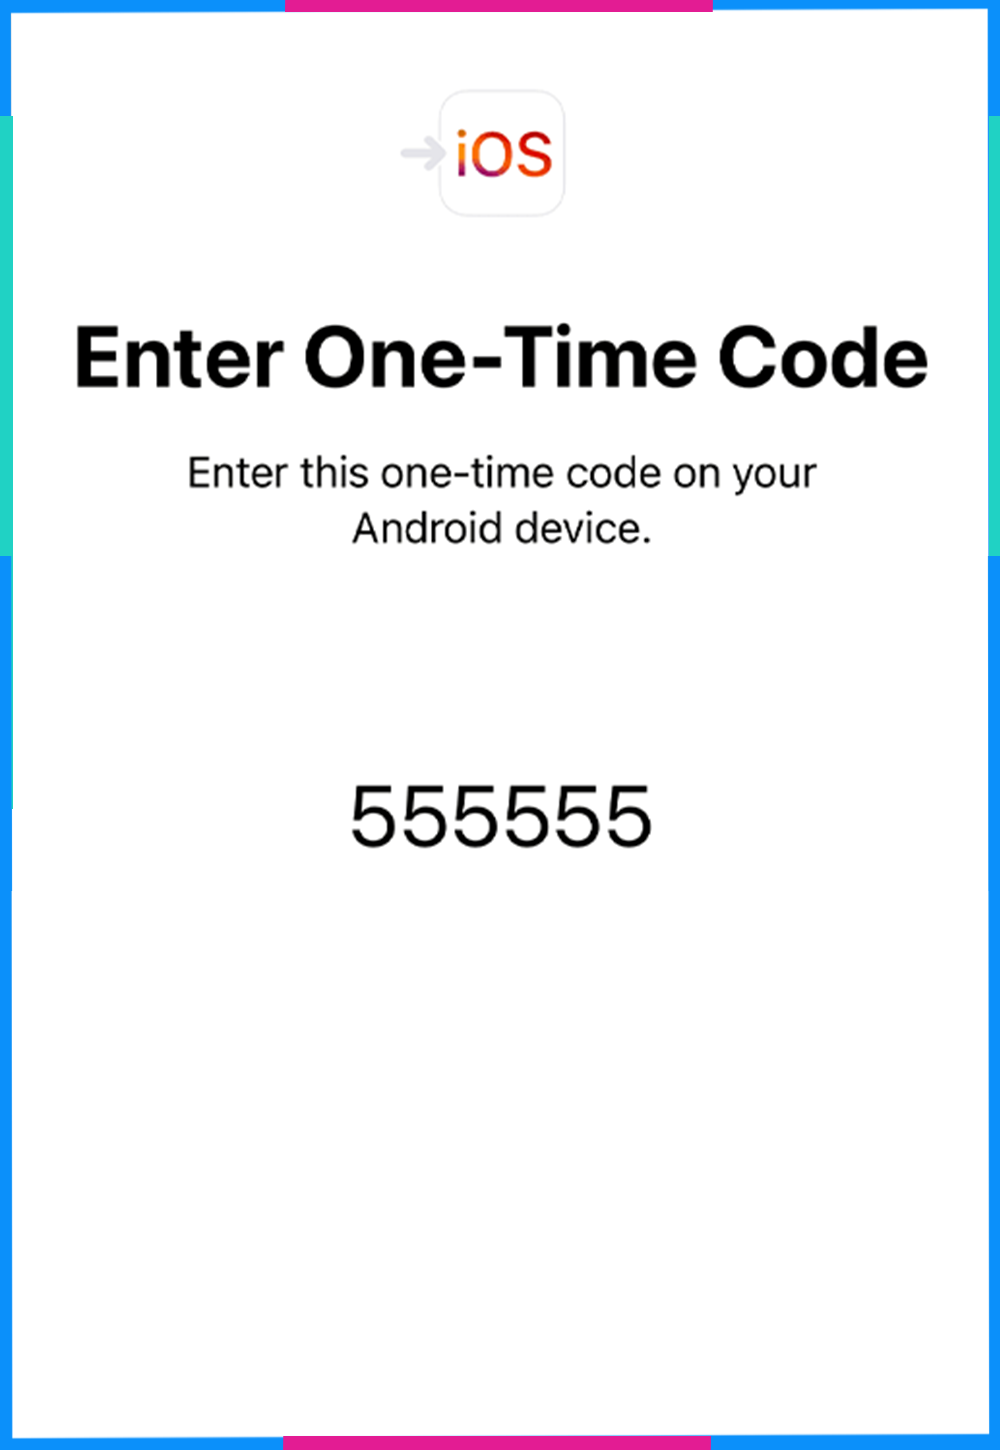 chuyển danh bạ từ android sang iphone vcard B5